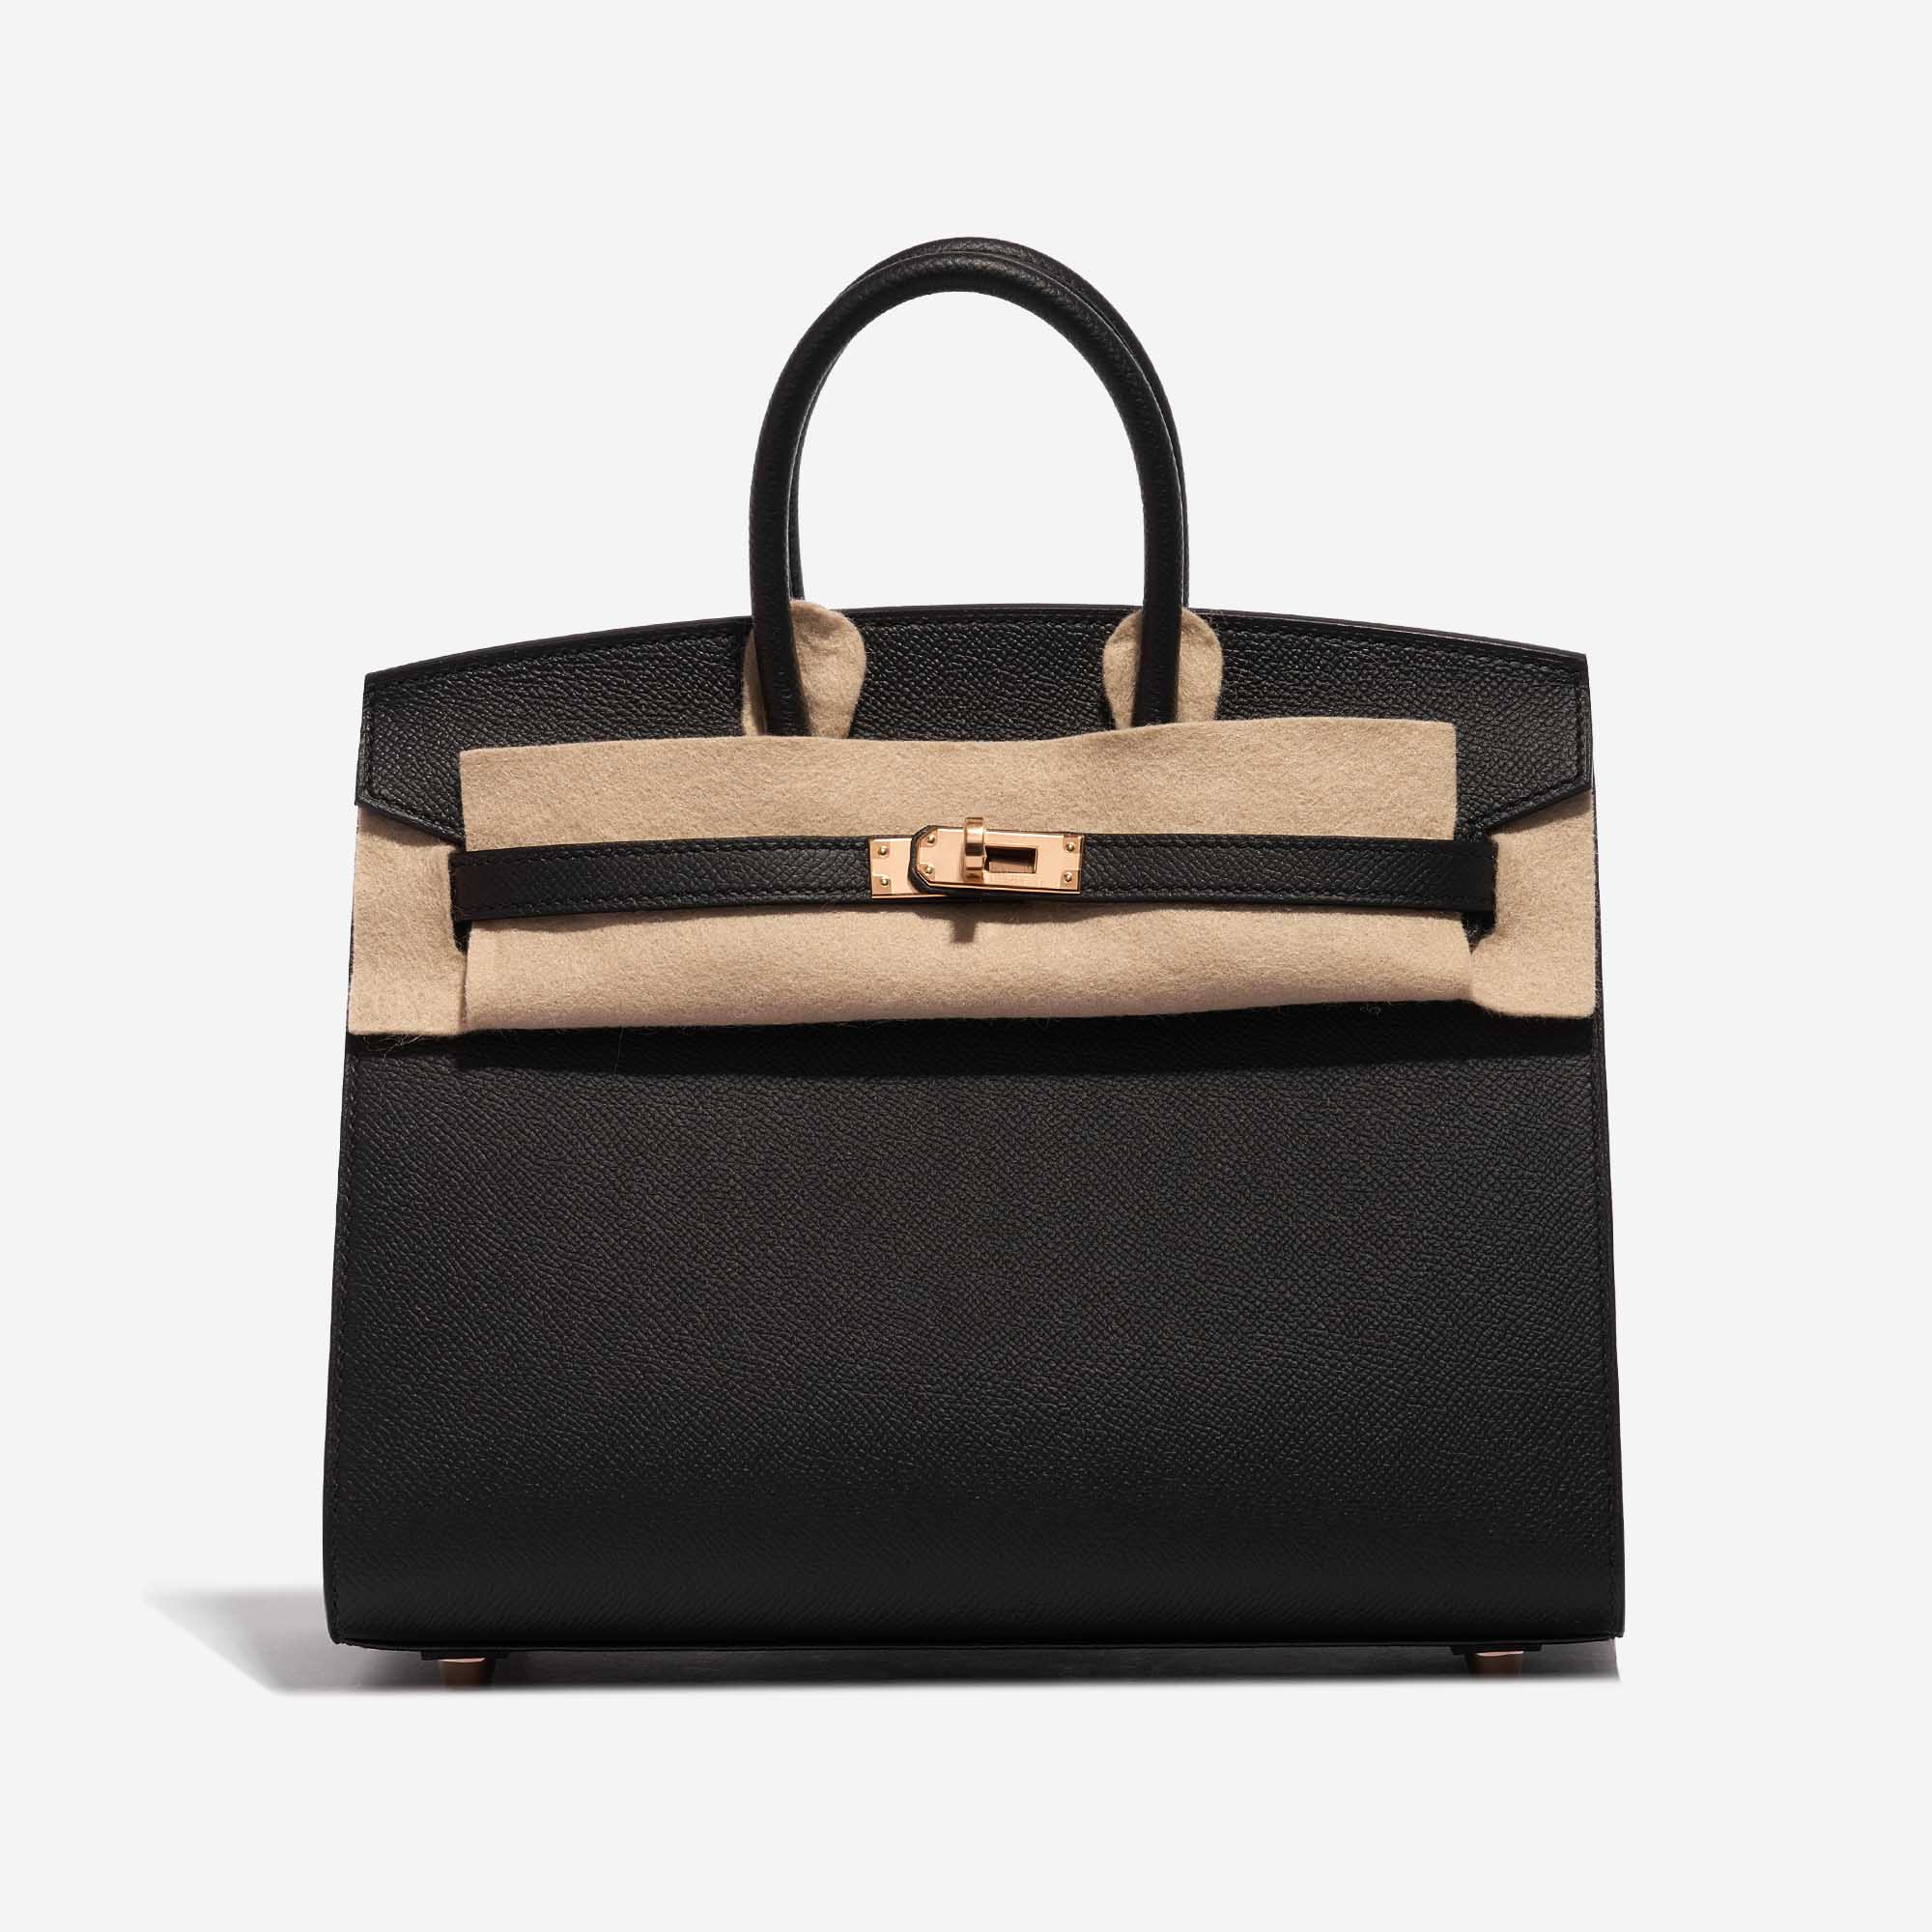 Hermès Birkin 25 cm Handbag in Black Epsom Leather